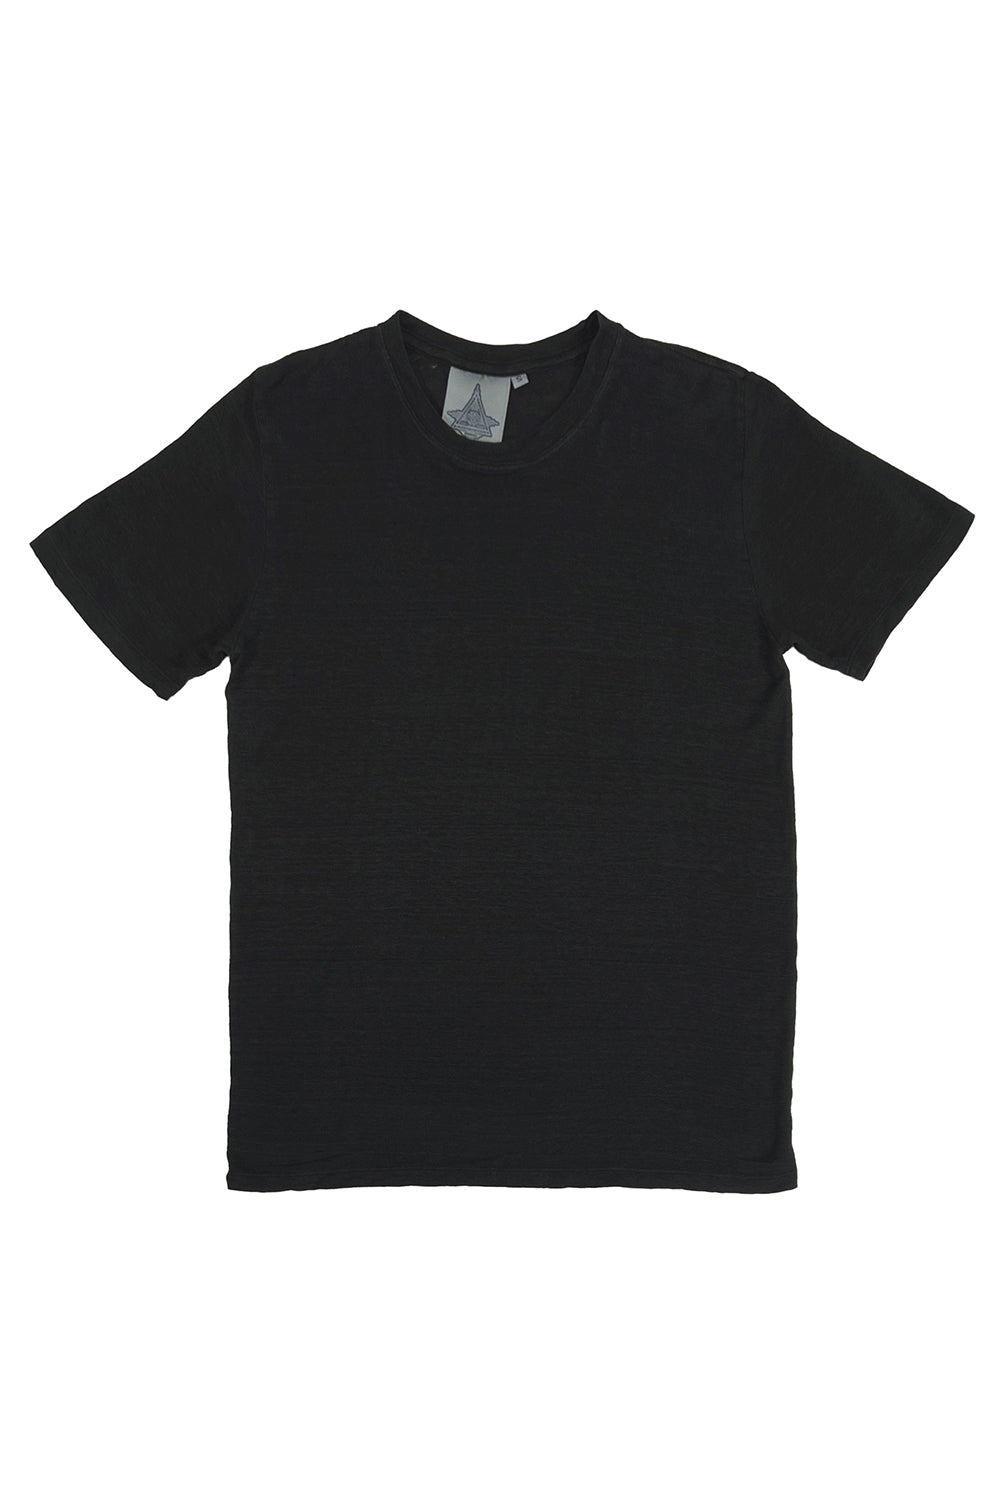 Mana 7 - 100% Hemp Tee | Jungmaven Hemp Clothing & Accessories / Color: Black